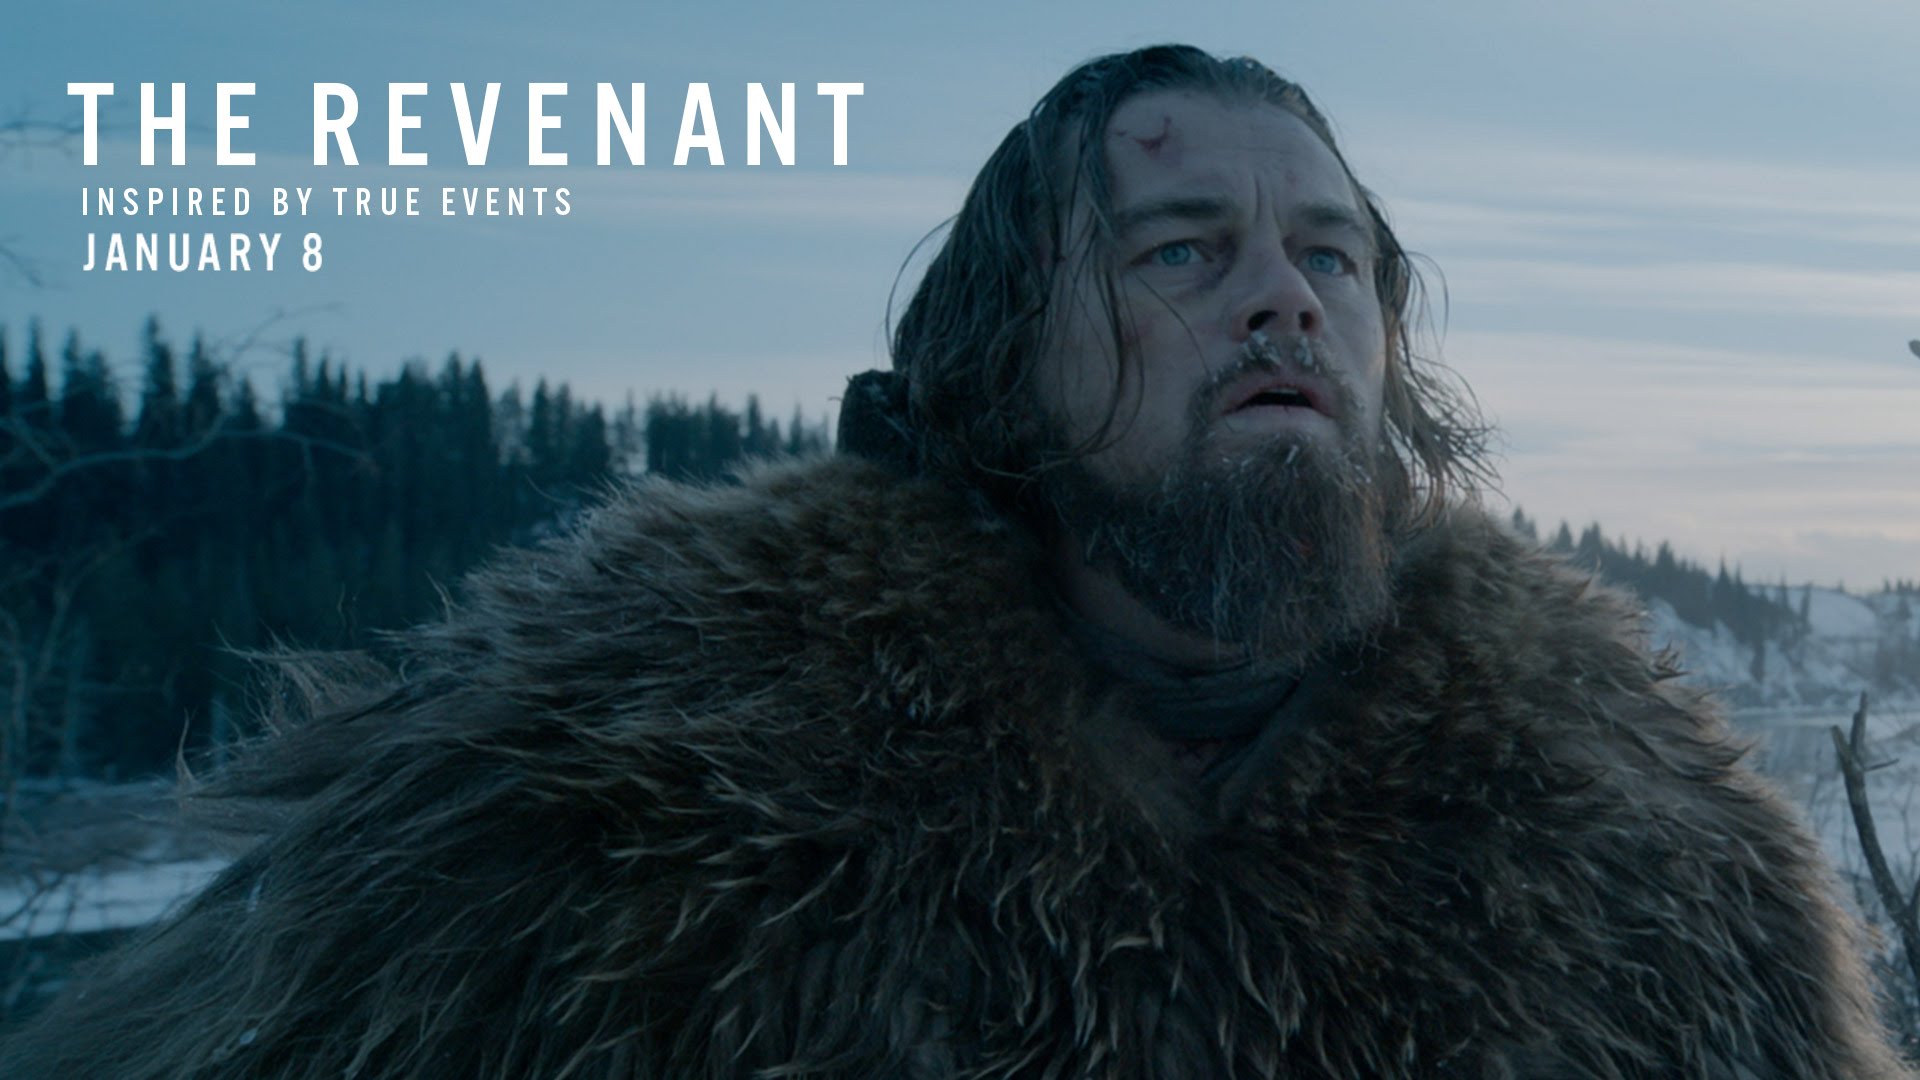 "The Revenant," starring Leo DiCaprio